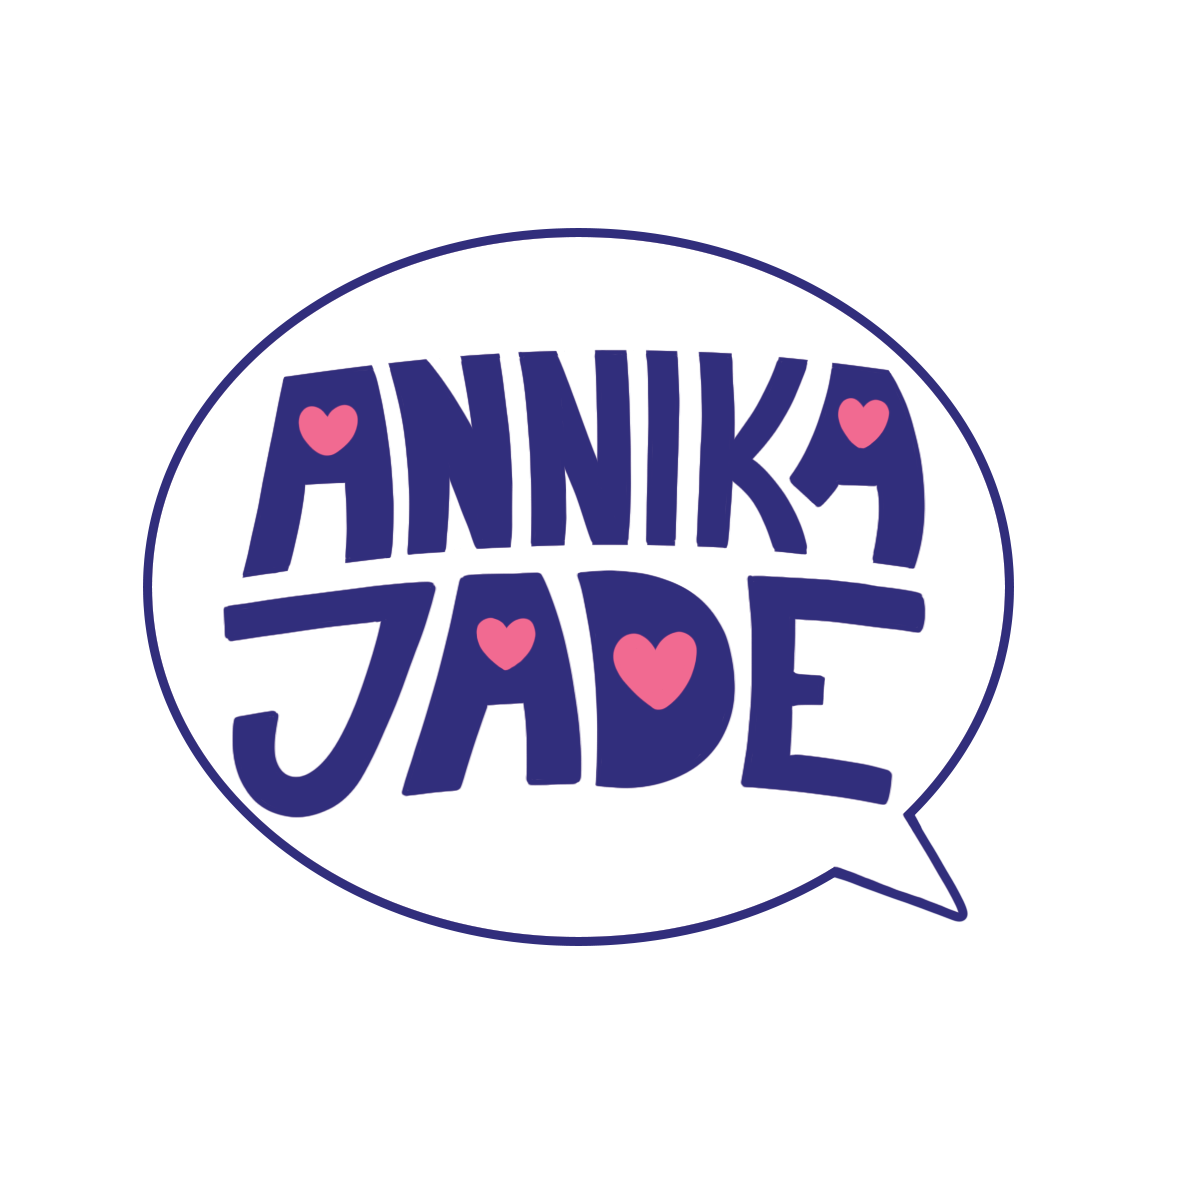 Annika Jade